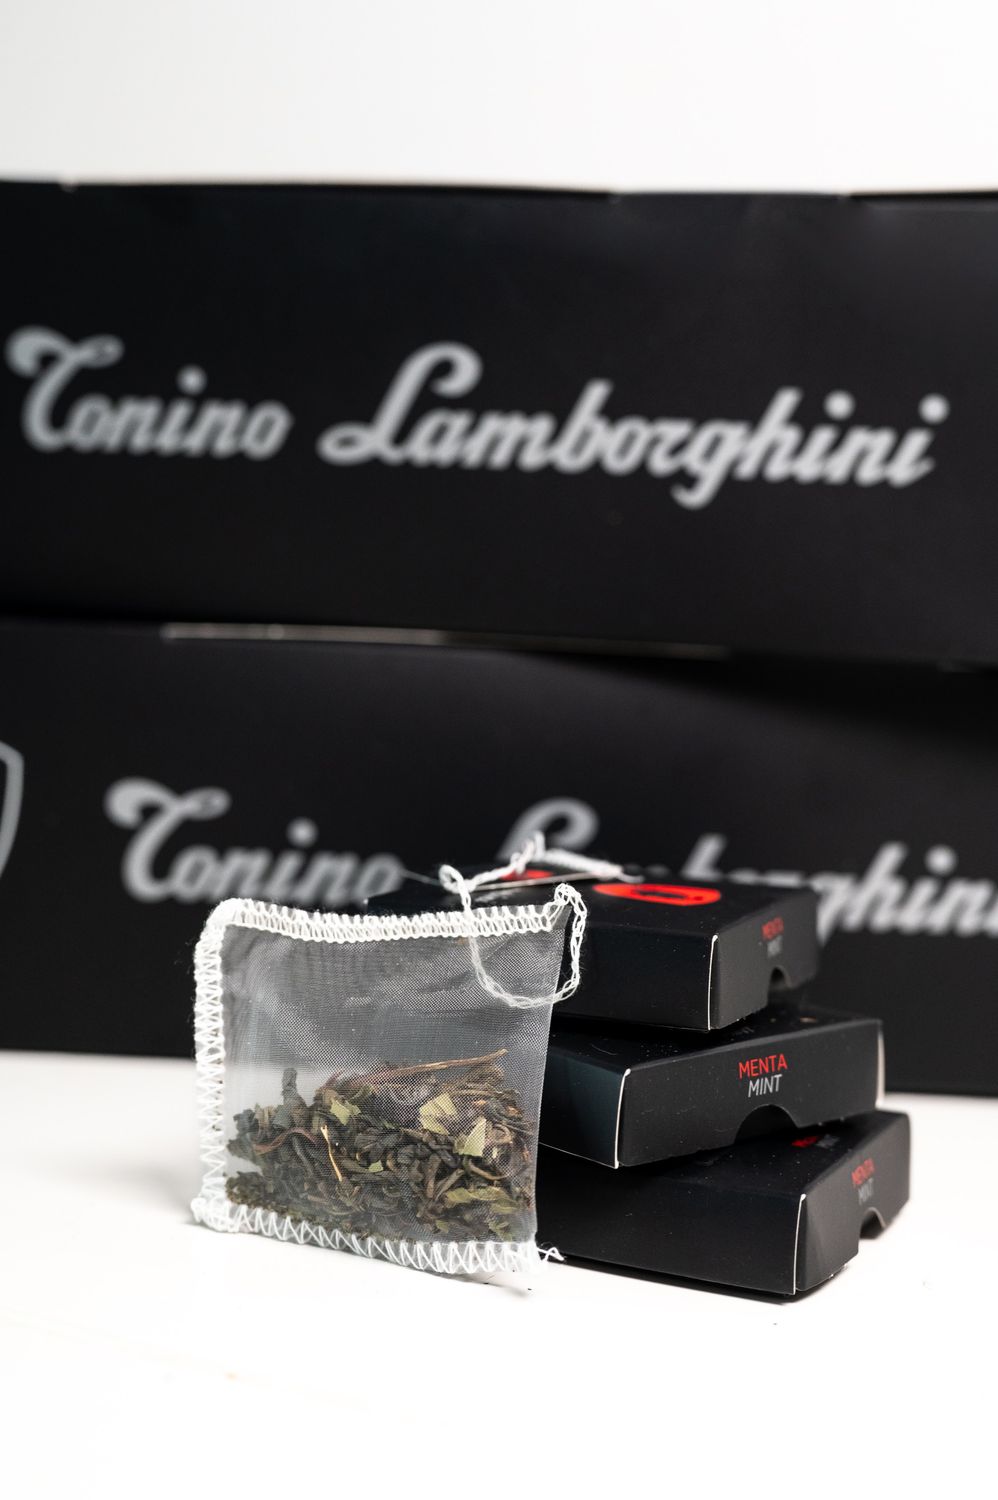 Arbata Tonino Lamborghini &quot;Mint&quot;